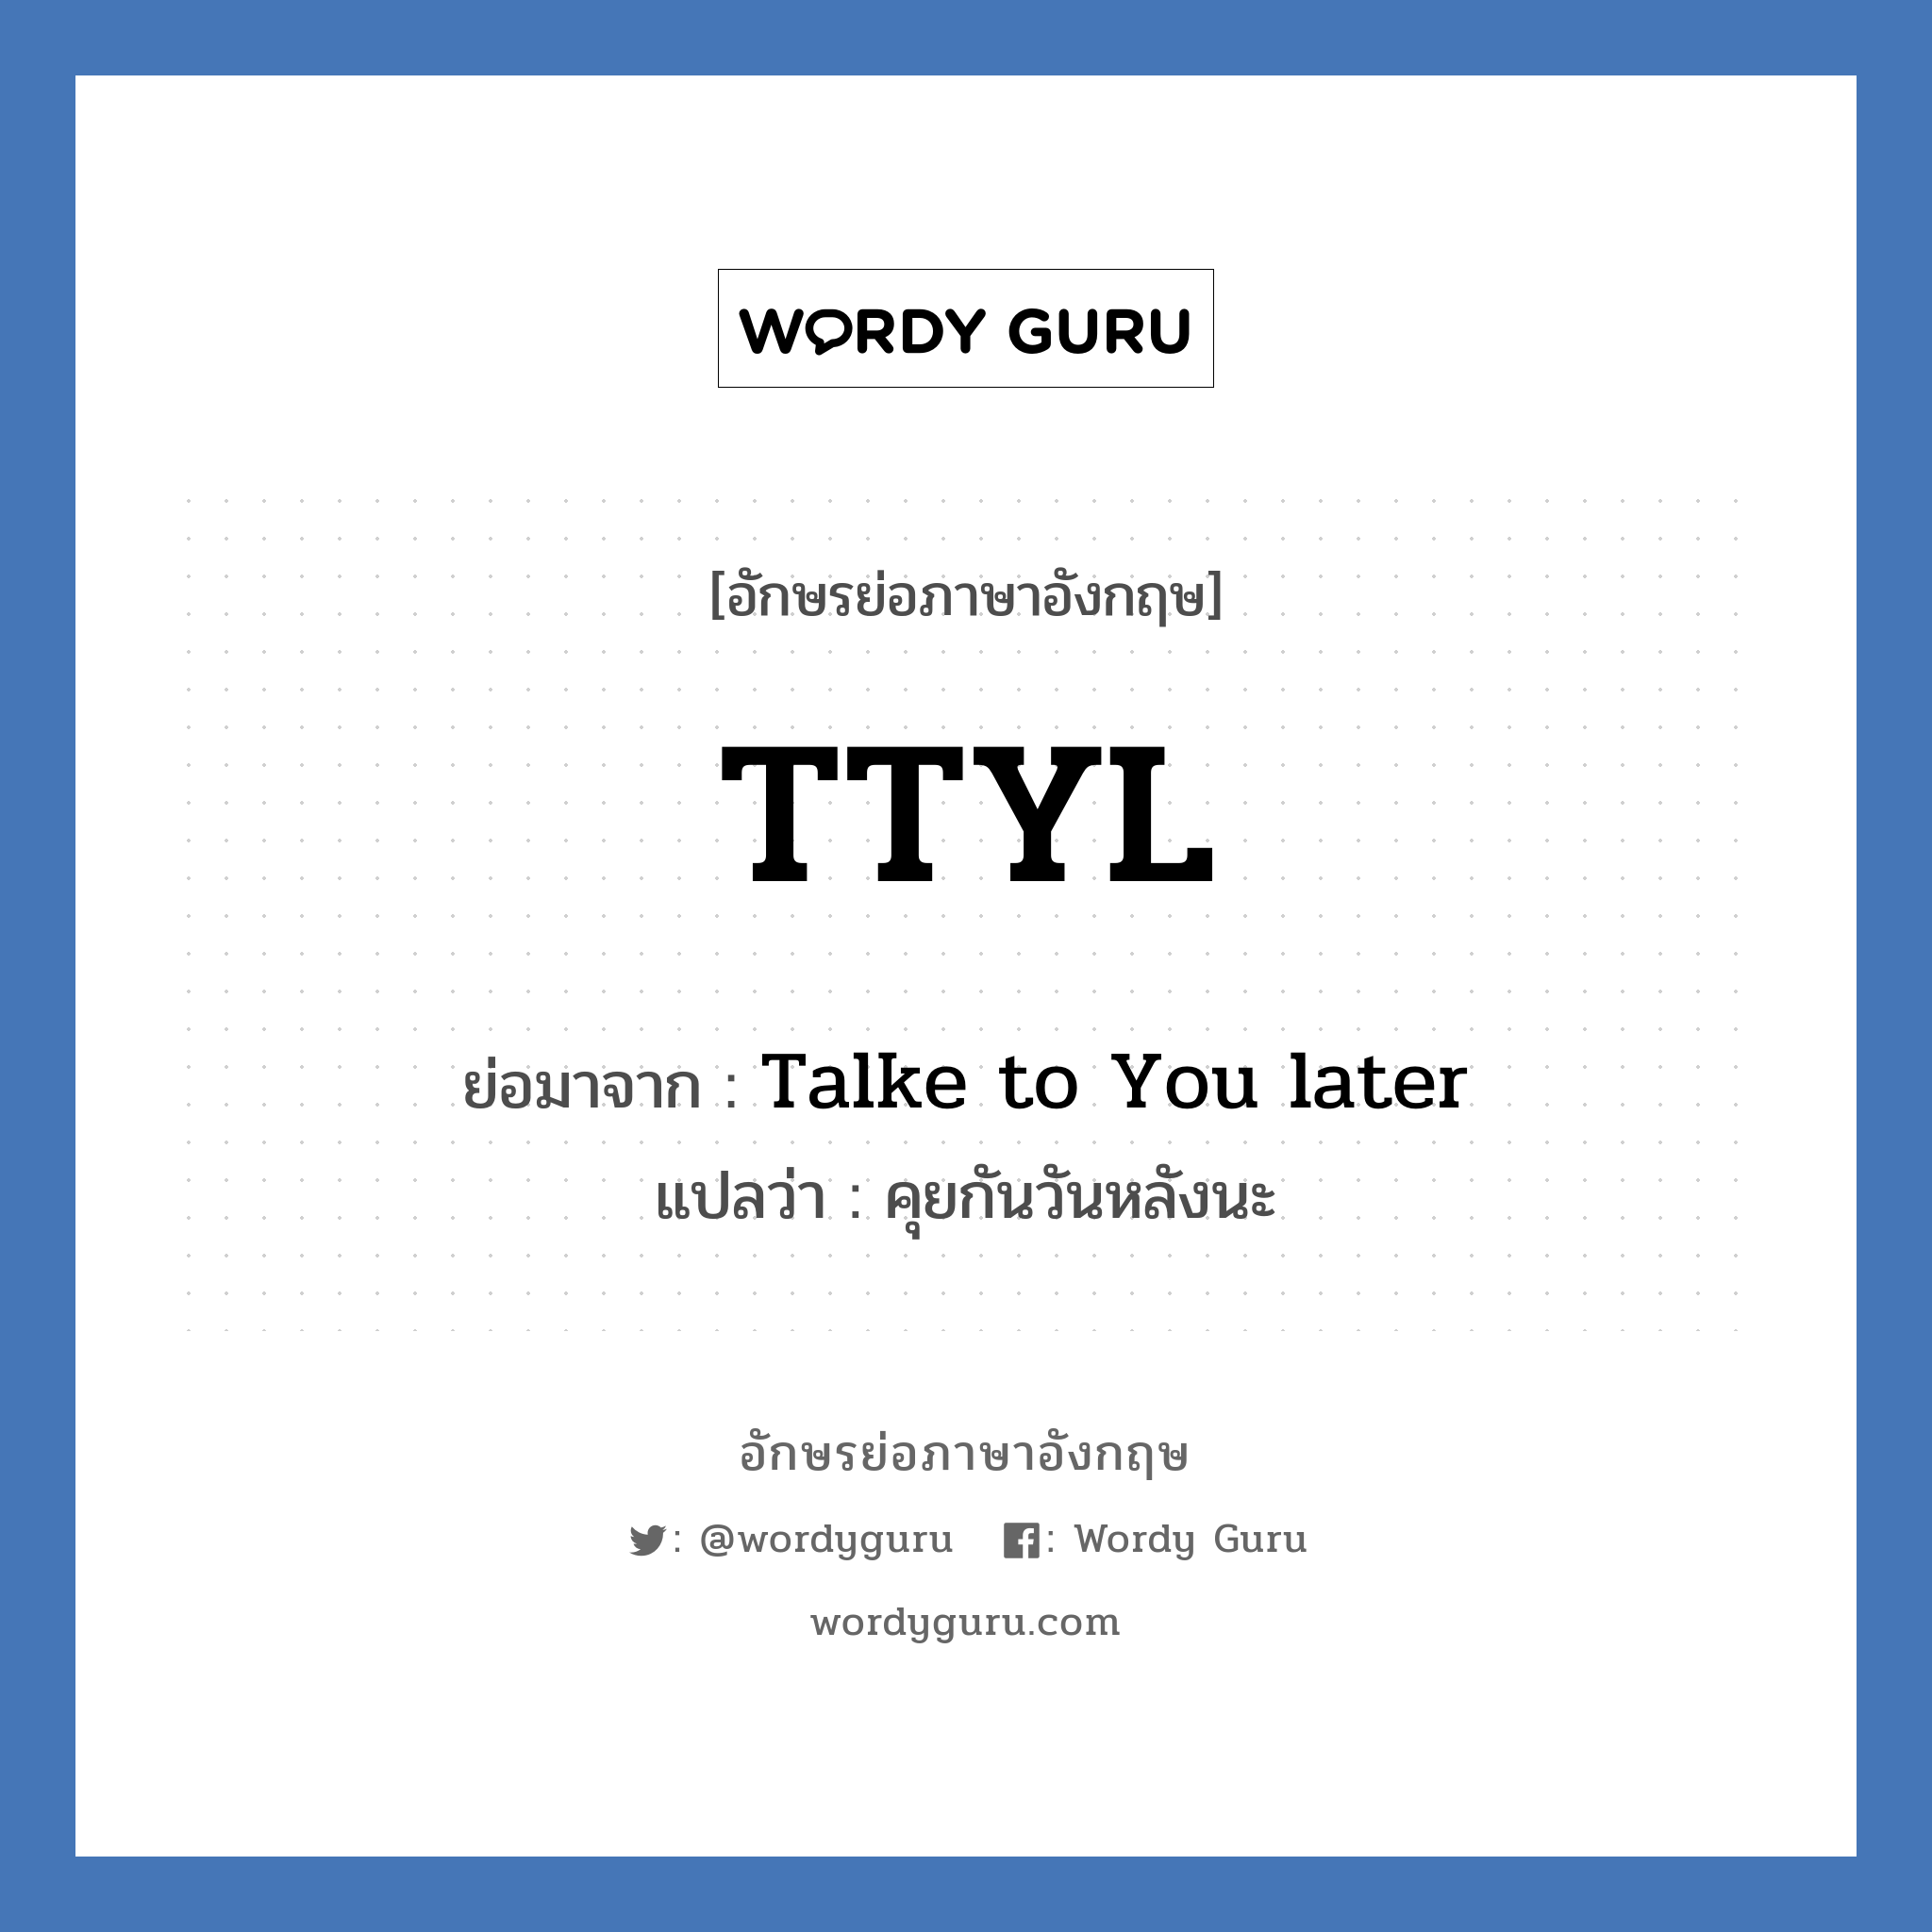 Talke to You later คำย่อคือ? แปลว่า?, อักษรย่อภาษาอังกฤษ Talke to You later ย่อมาจาก TTYL แปลว่า คุยกันวันหลังนะ